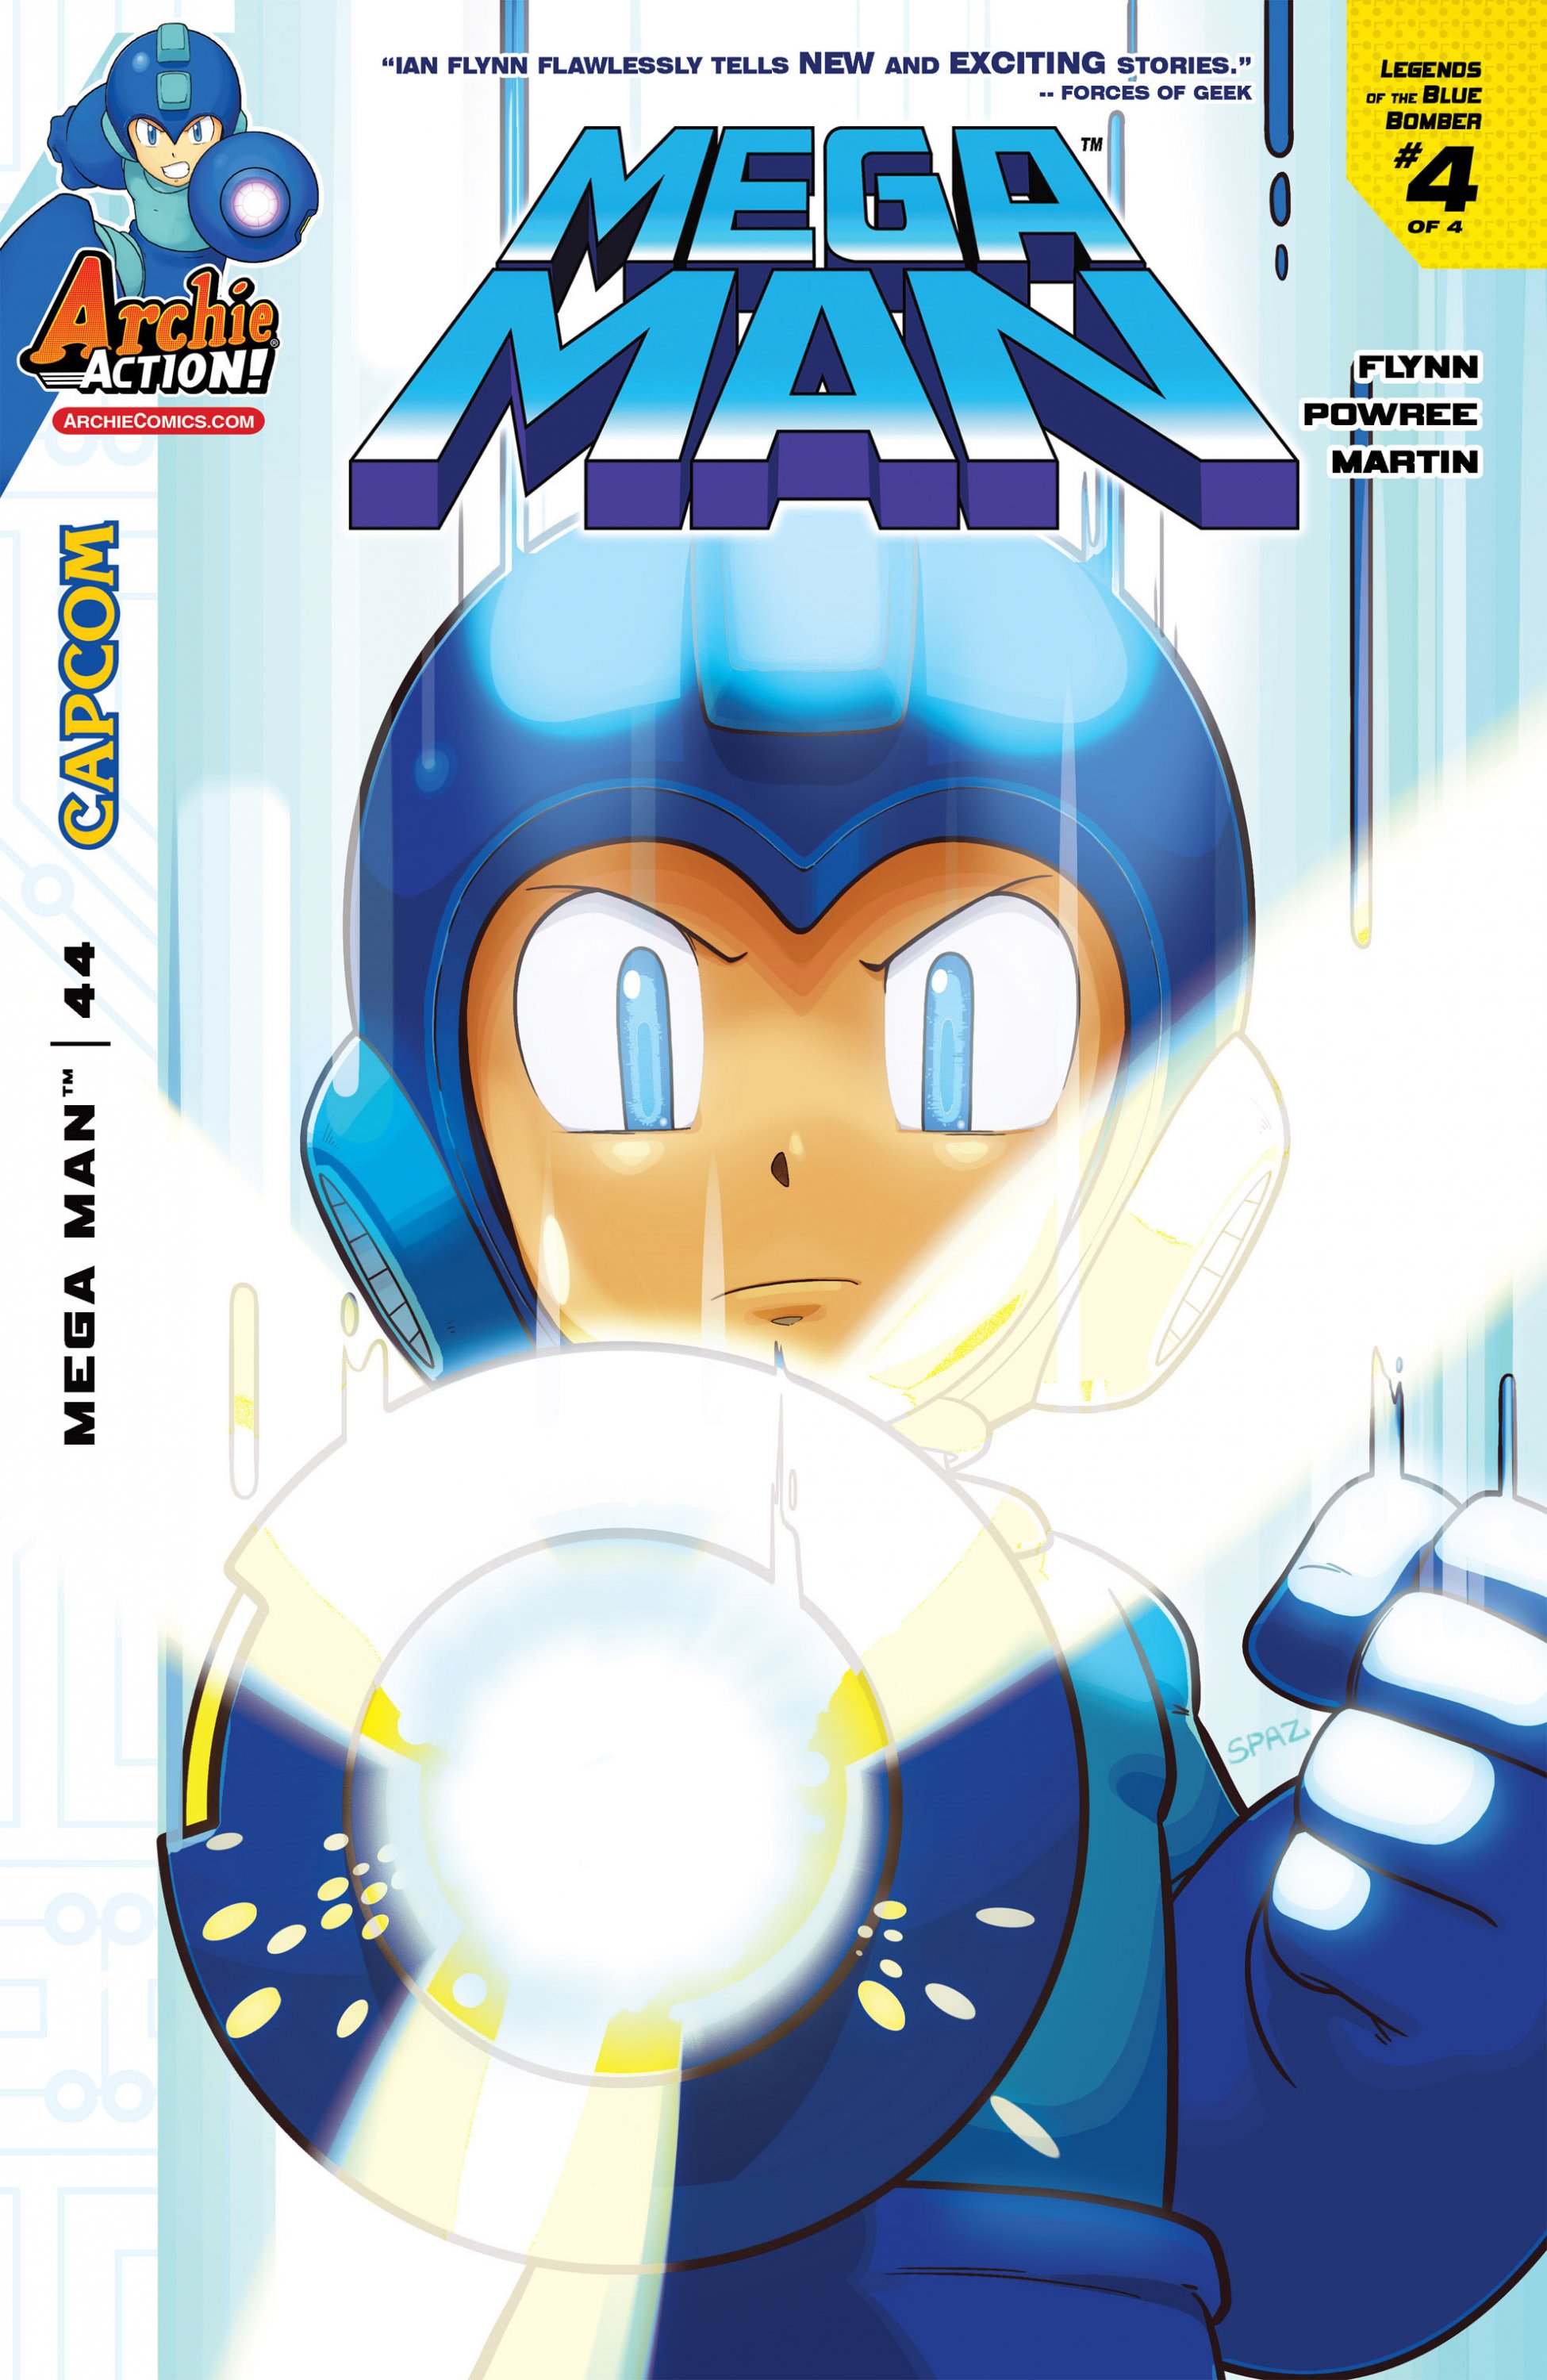 Mega Man 044 (February 2015)